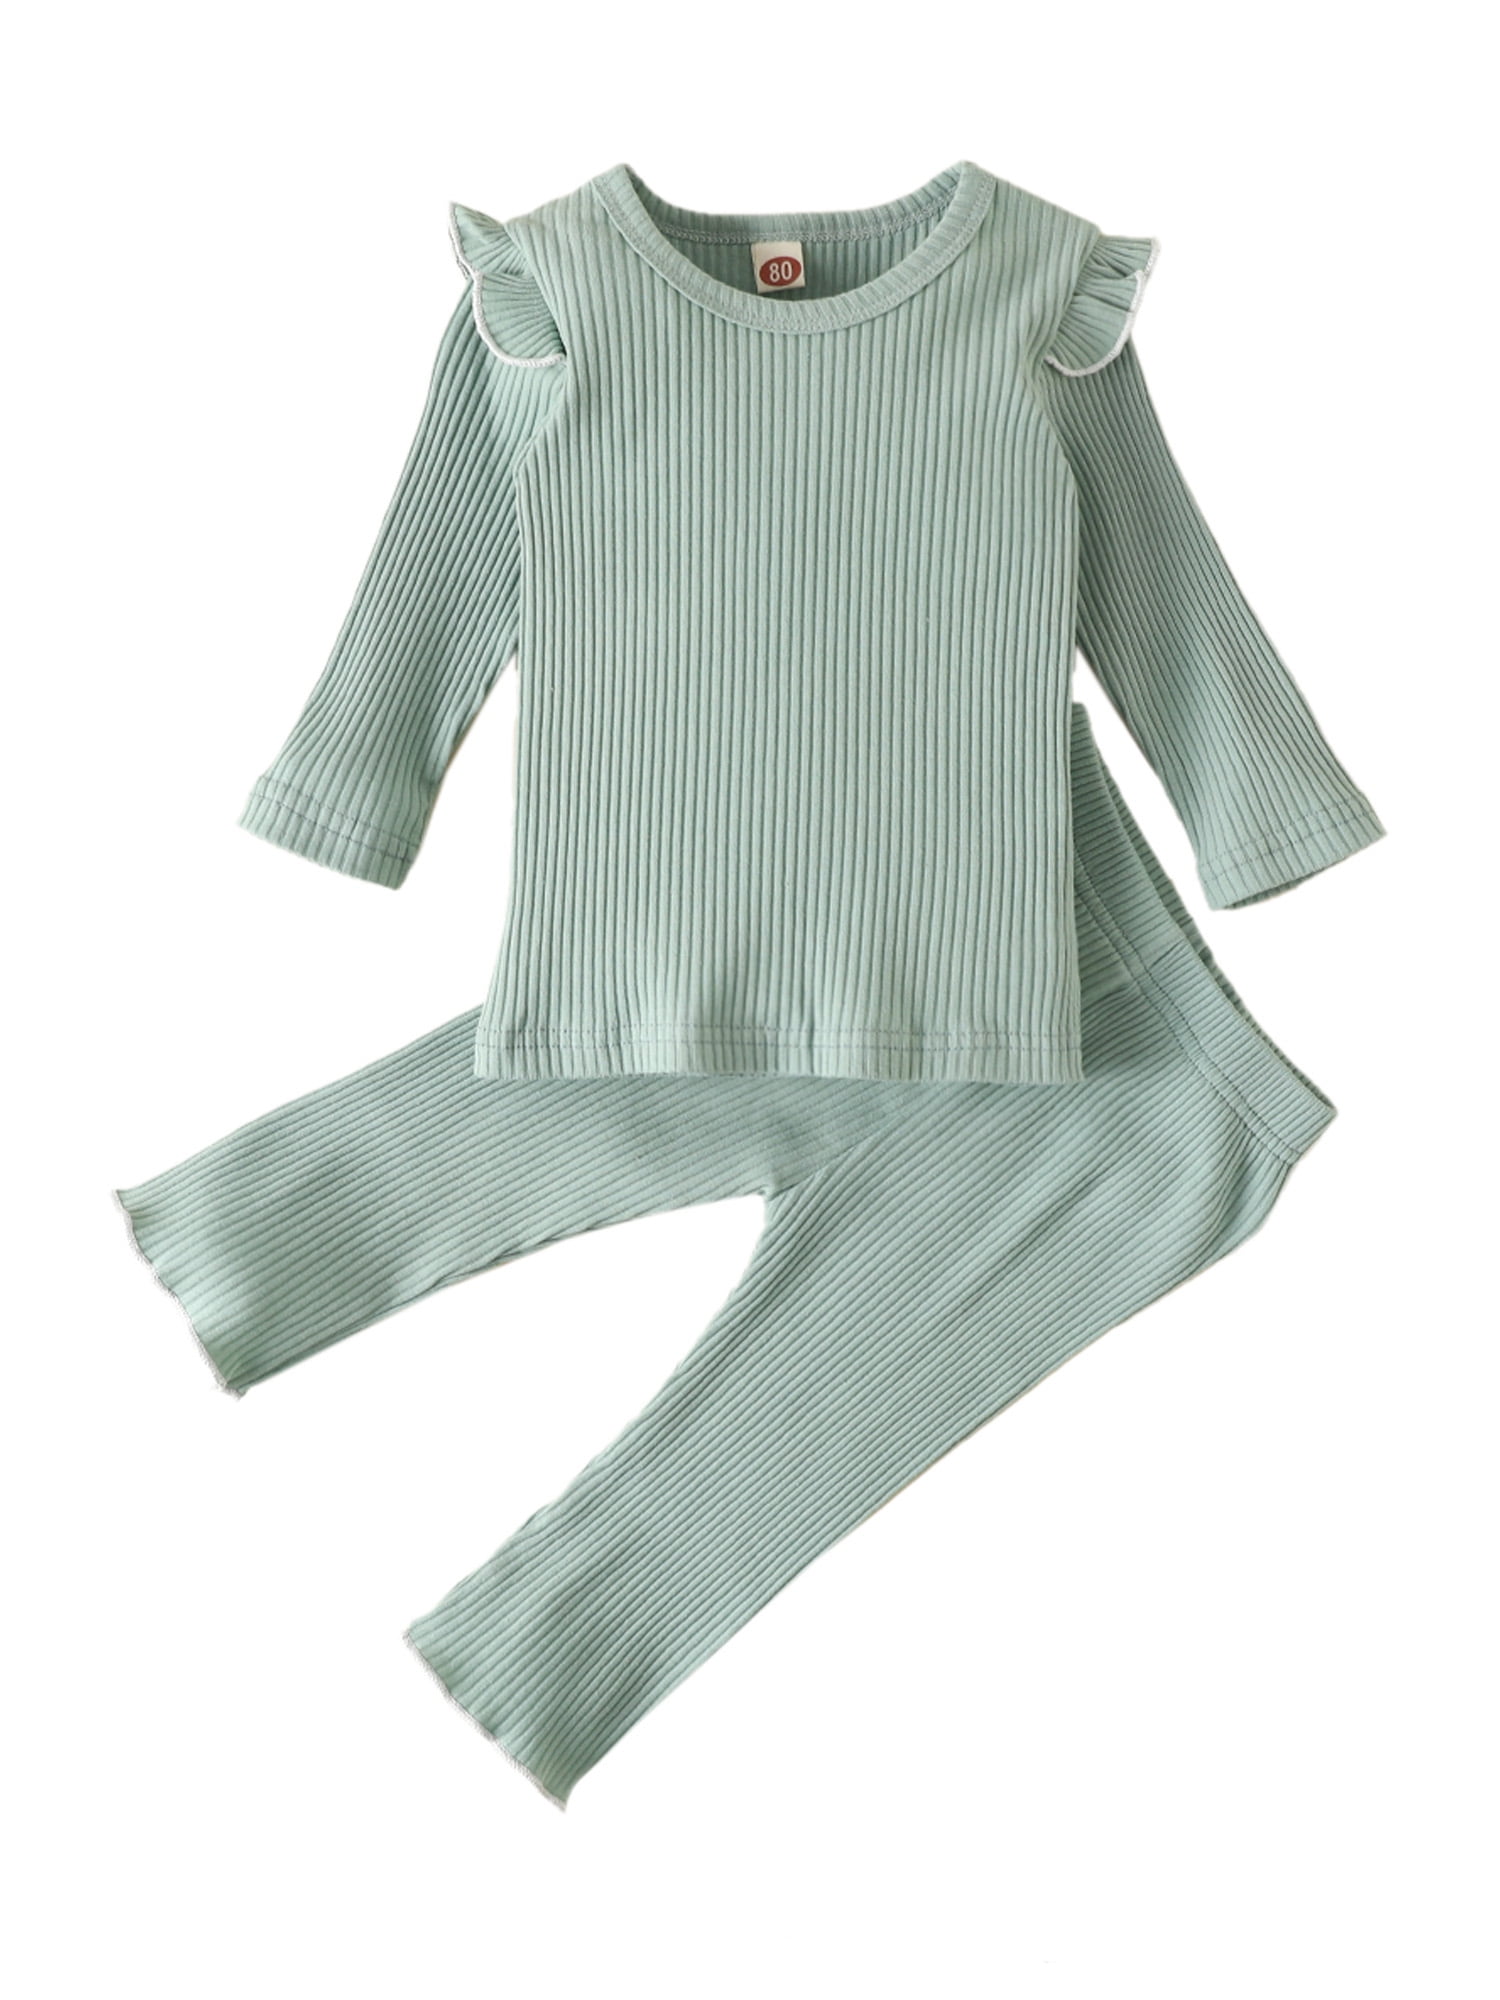 Toddler Baby Girls Long Sleeve Solid Ruffle Tops Pants Pajamas Sleepwear Set 